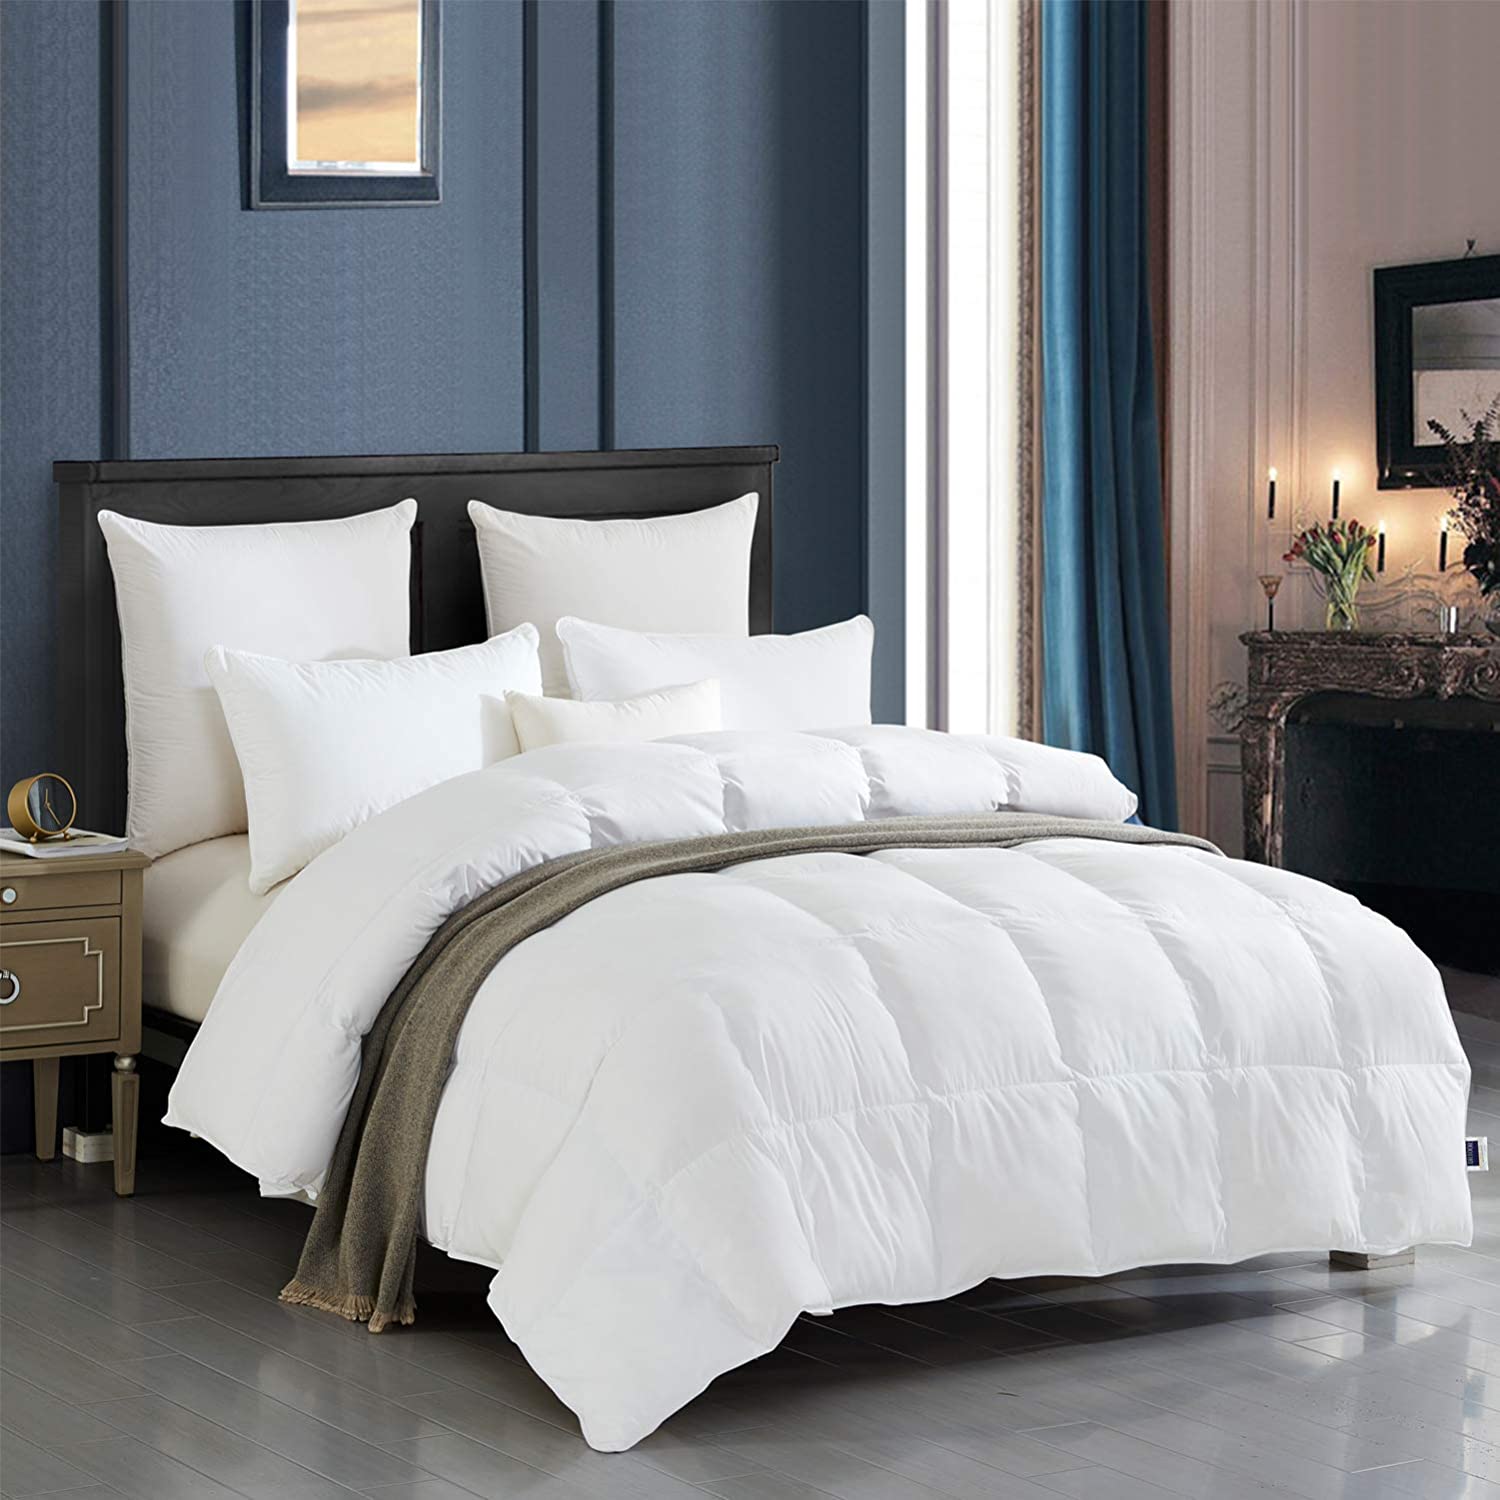 drtoor Luxurious Down Comforter 100% Hypoallerge All Seasons King Duvet Insert 